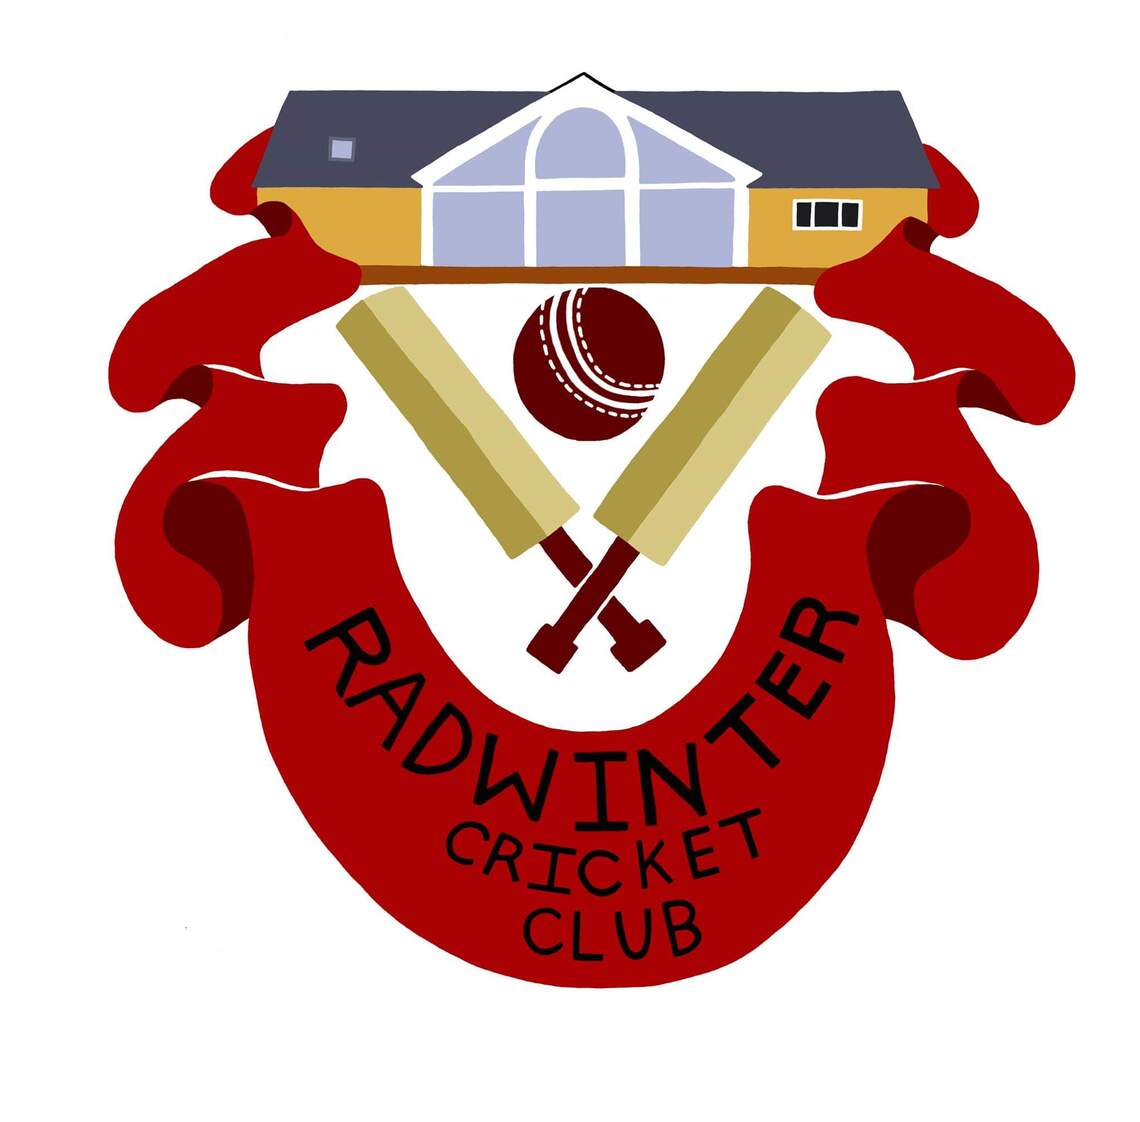 Radwinter Cricket Club logo